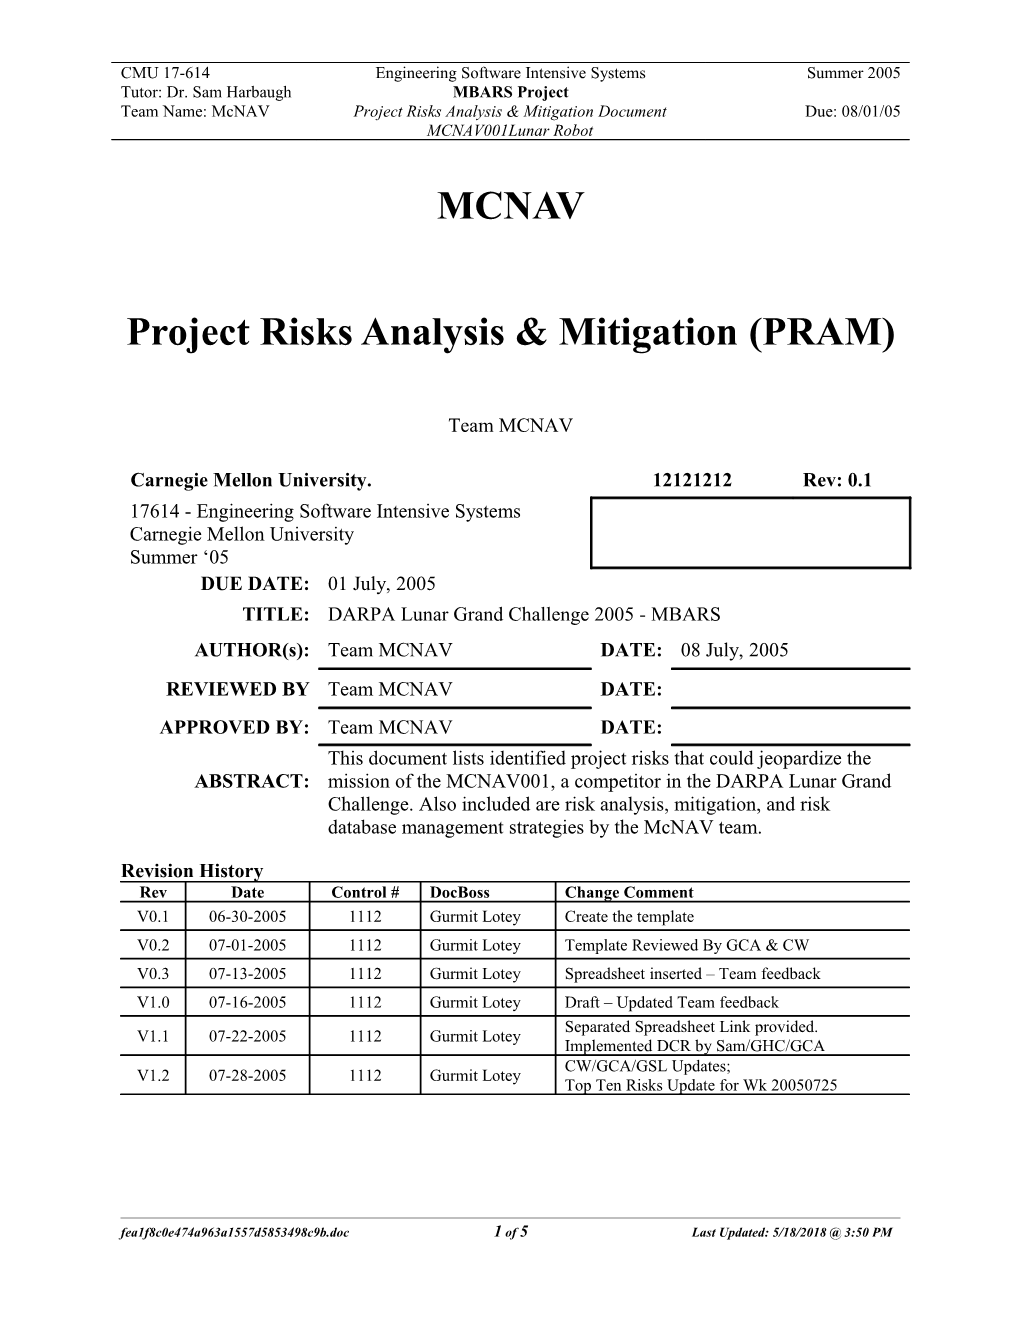 Mcnav Project Risks, Analysis & Mittigation (PRAM) Paper